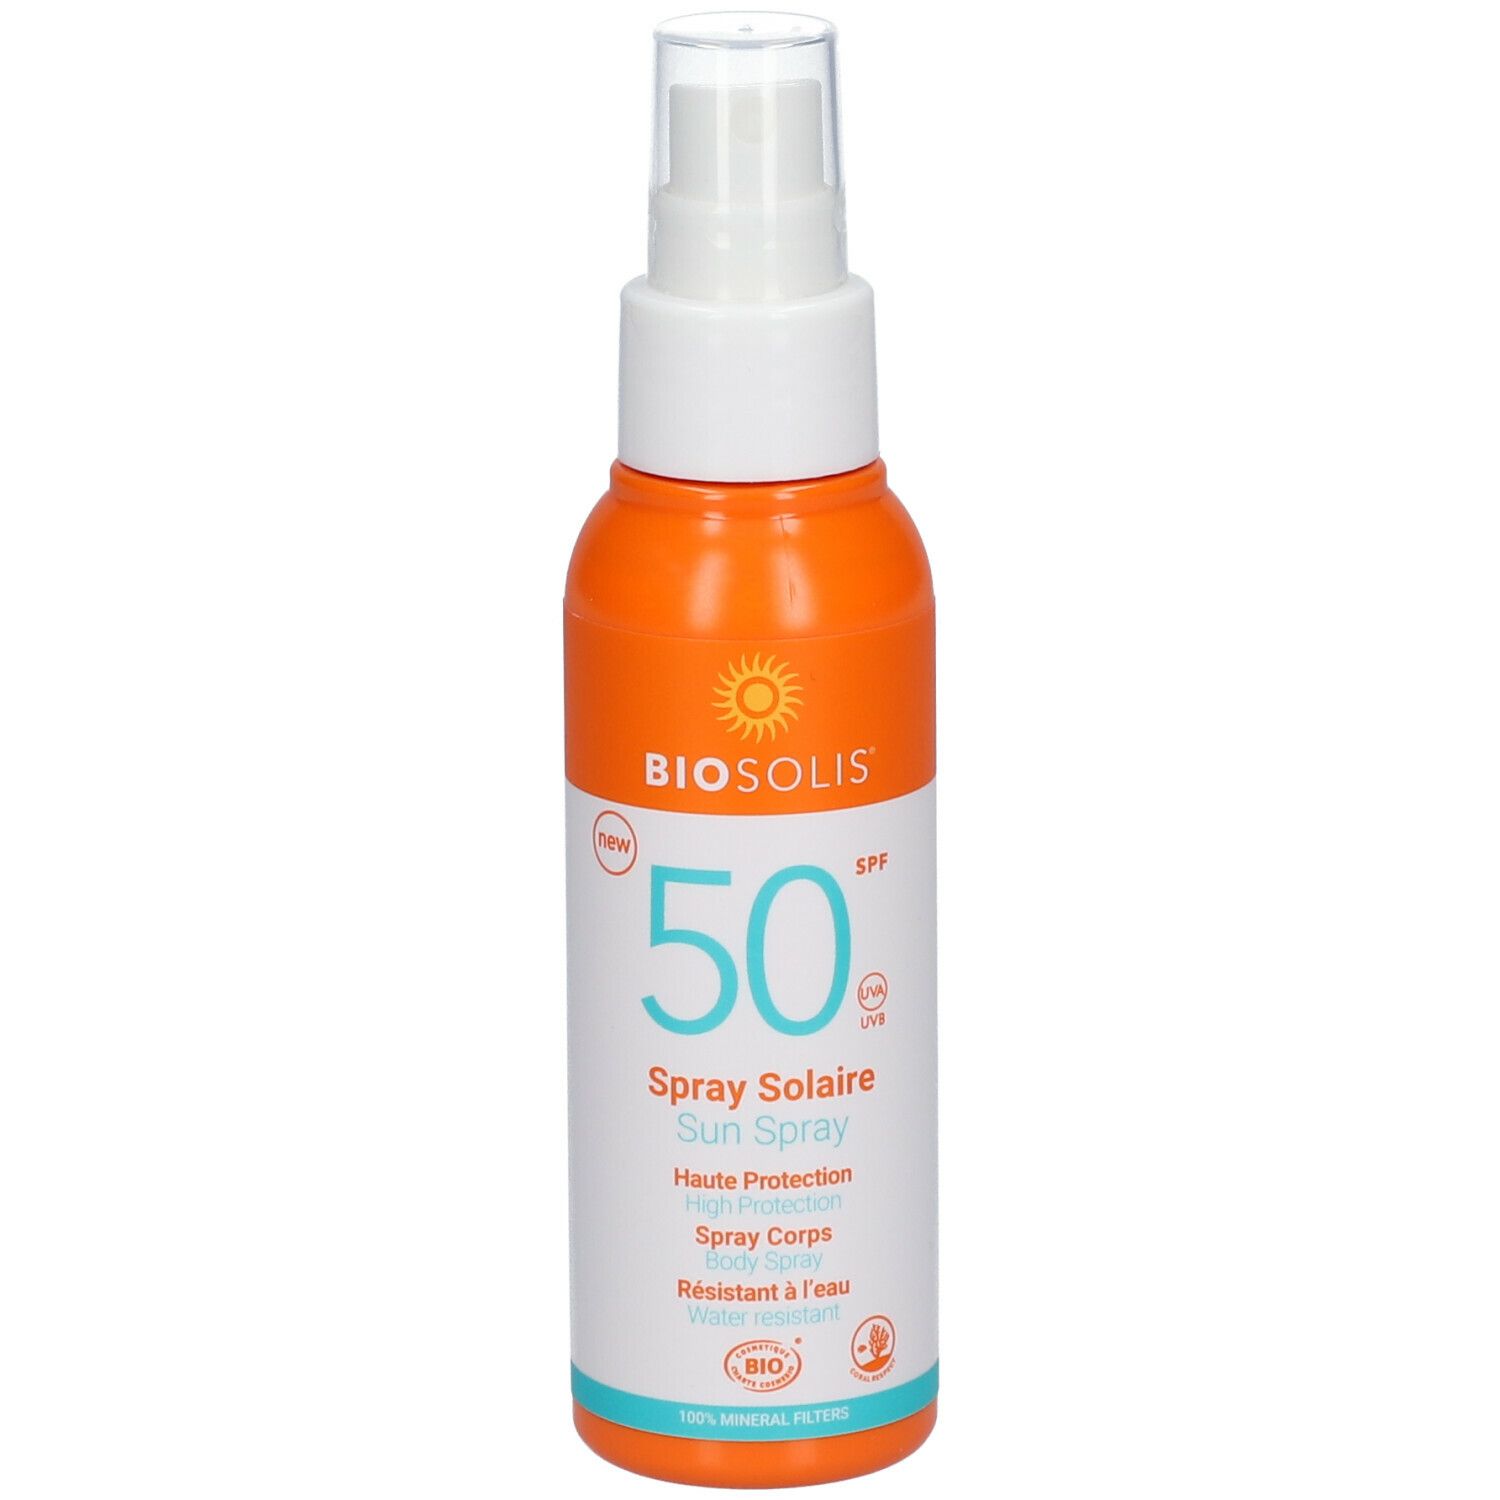 Biosolis® Spray Solaire Spf50